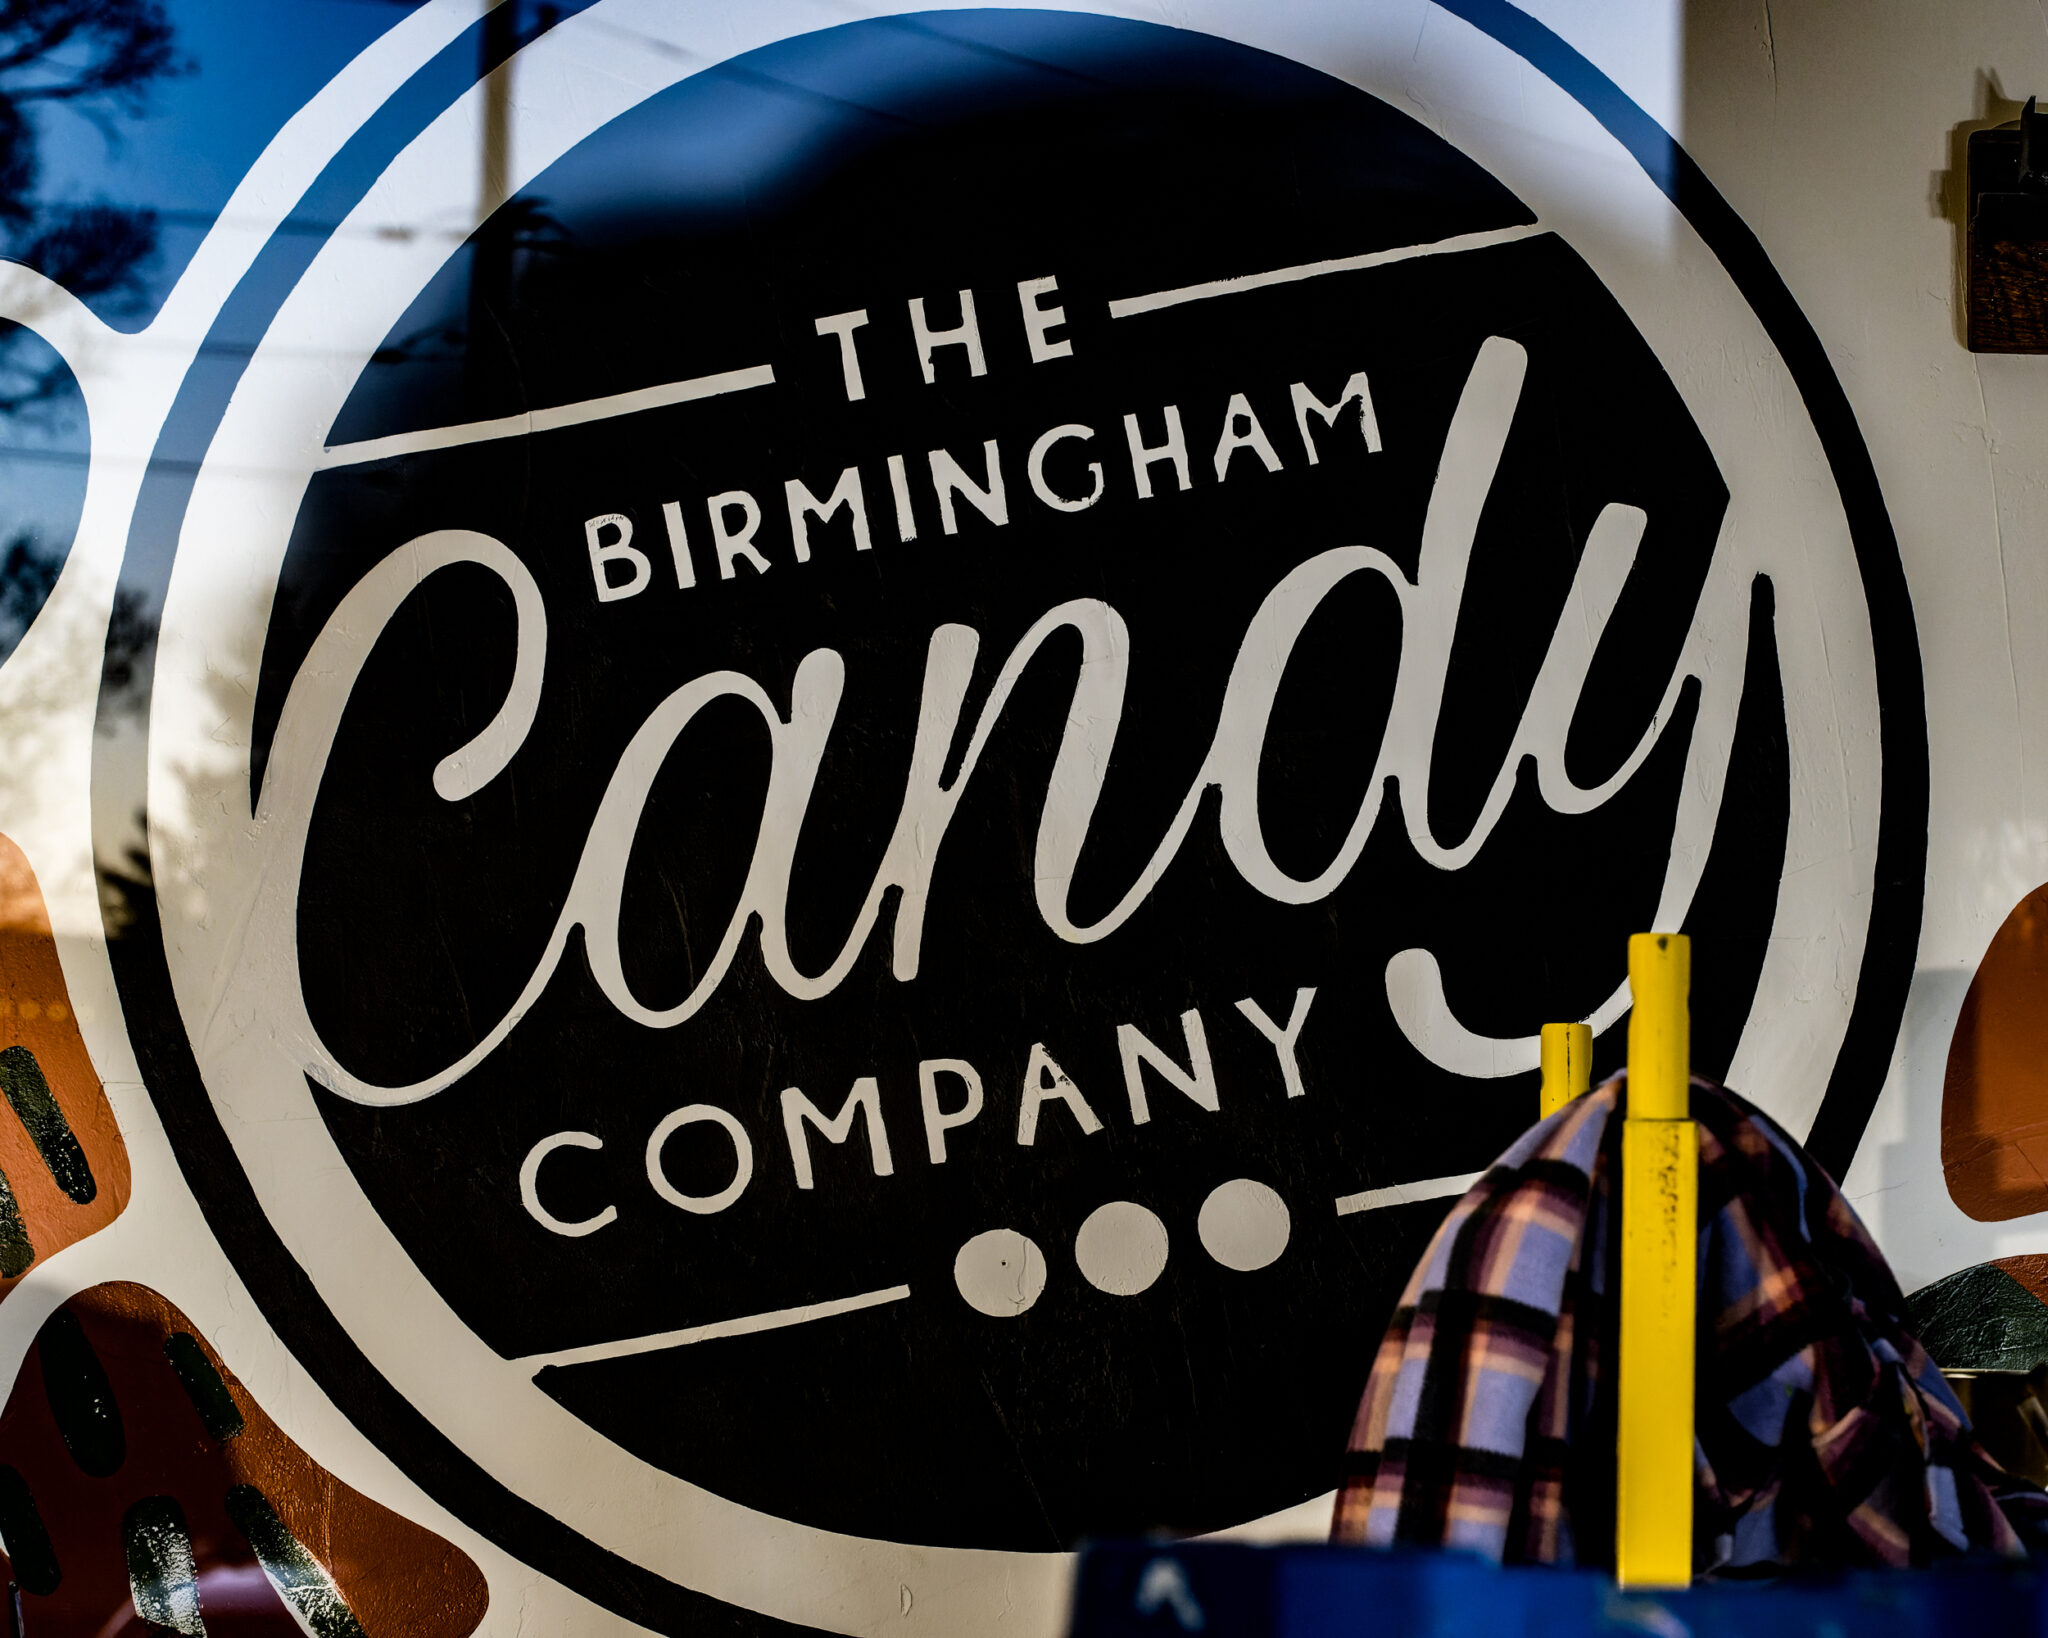 Birmingham Candy Company